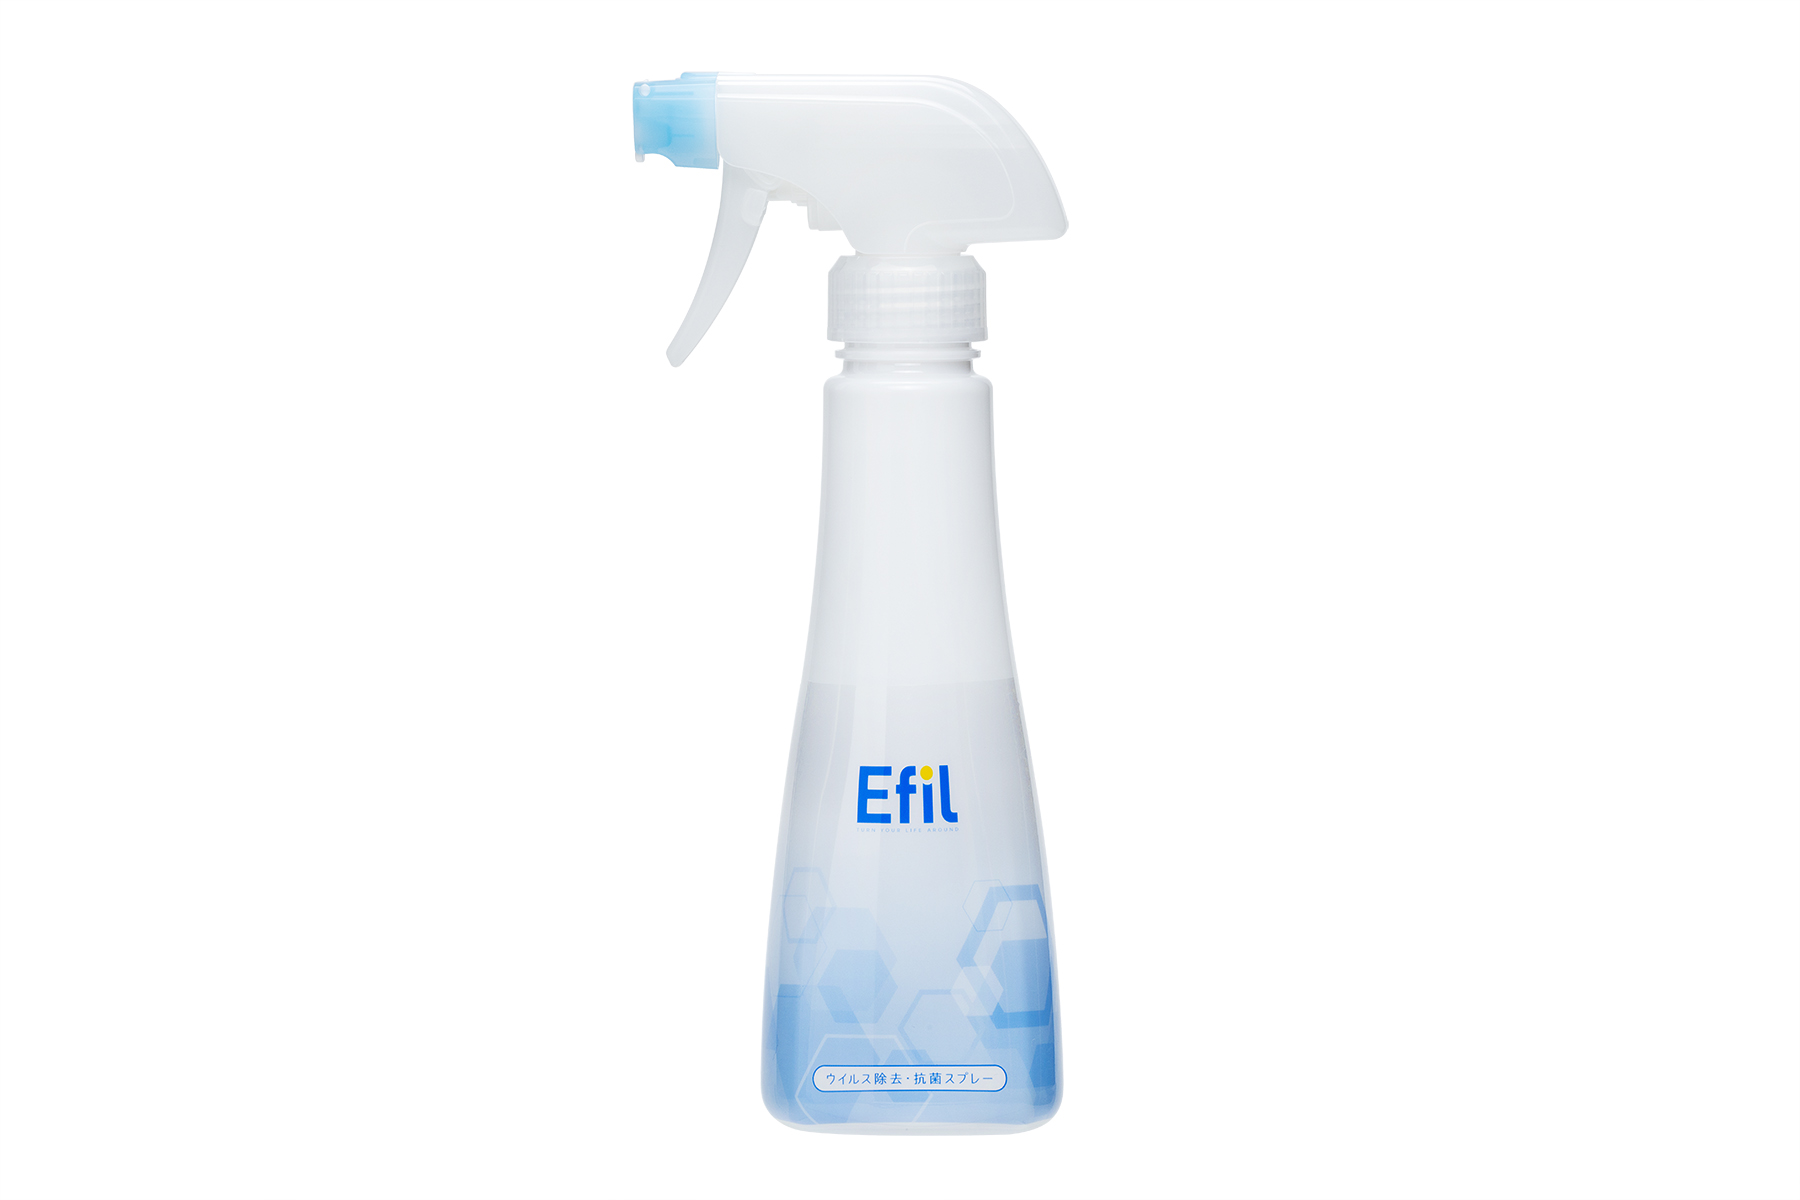 Efil Disinfectant Spray 300ml (Buy 1 get 1 Free)